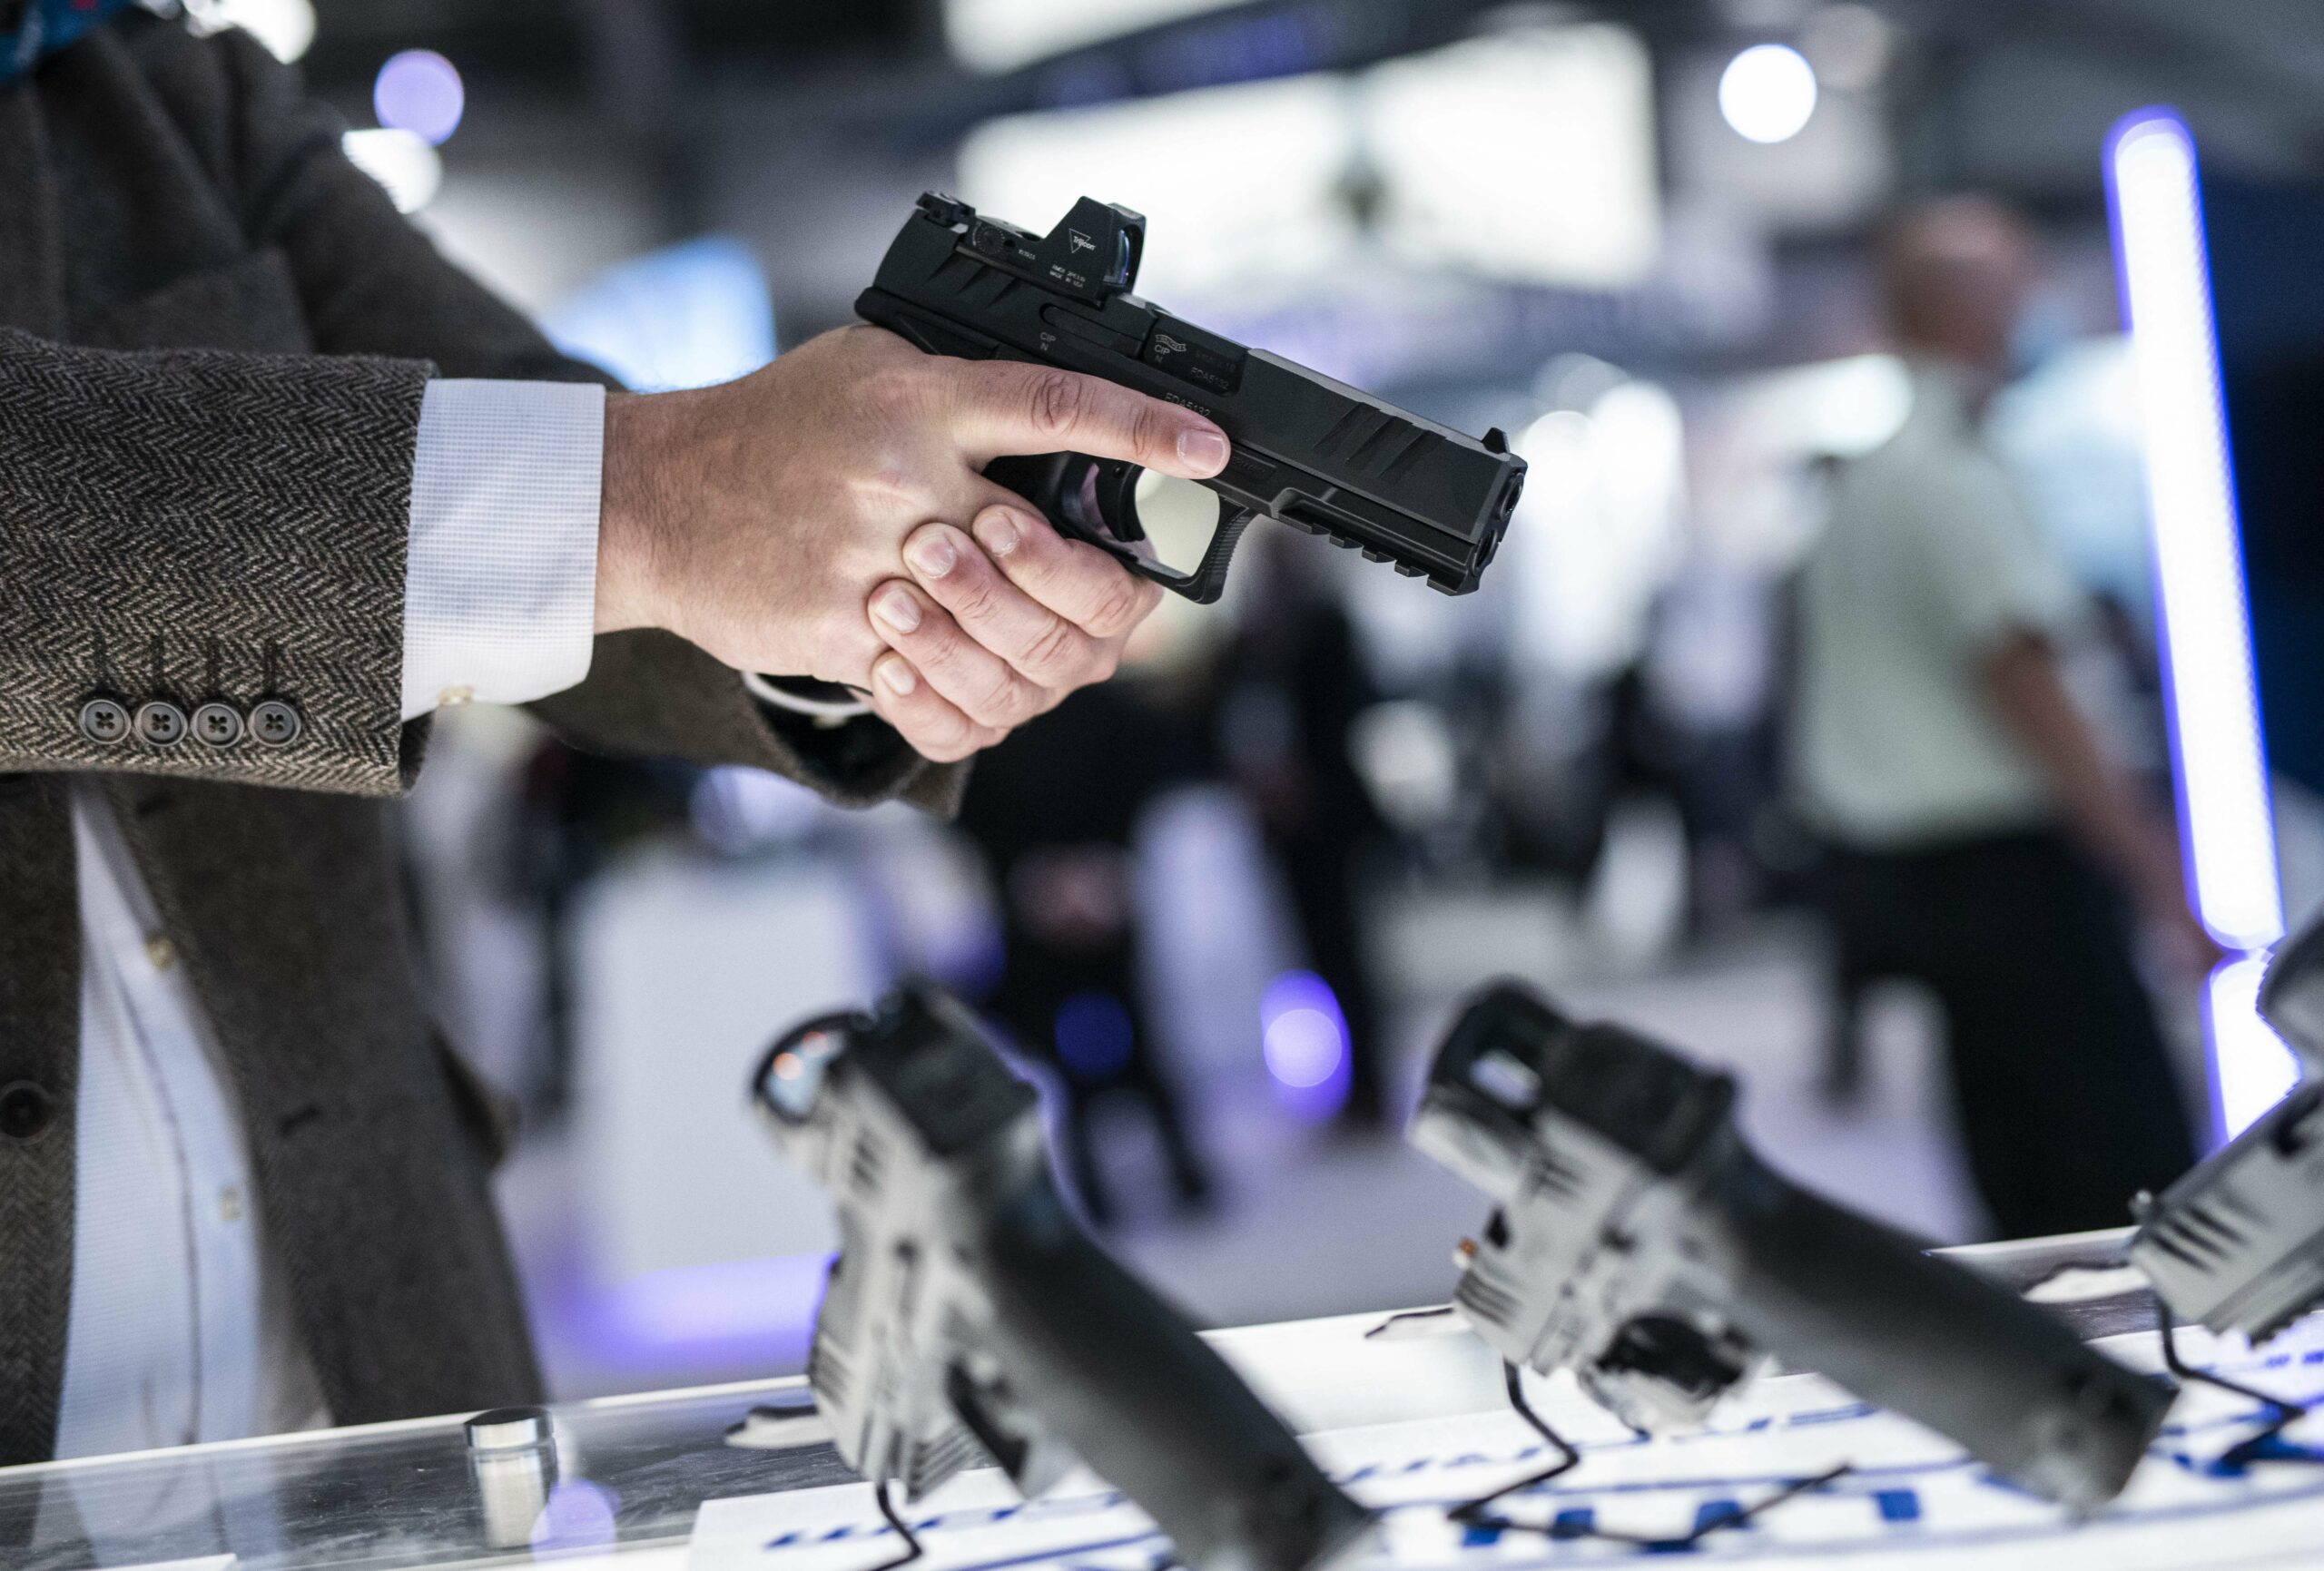 Critics blame delays at firearms centres on Liberals' gun control measures